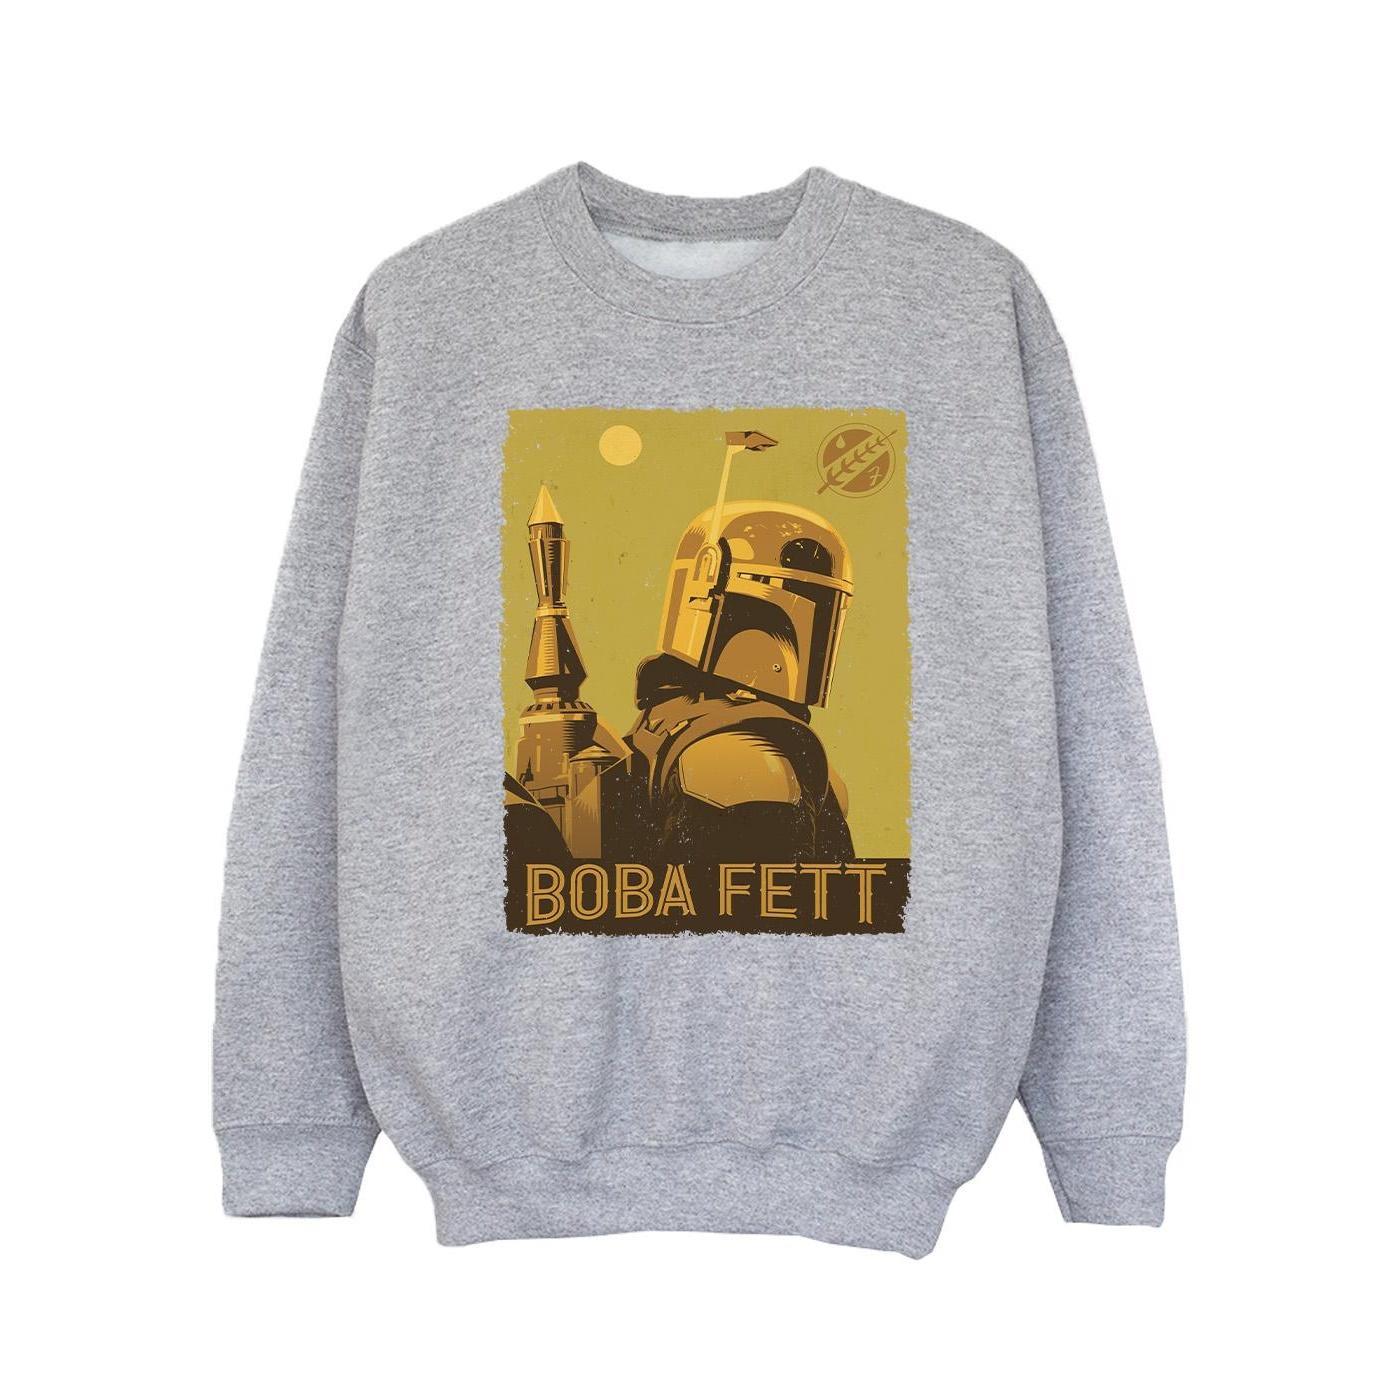 Star Wars Girls The Book Of Boba Fett Planetary Stare Sweatshirt (Sports Grey) (3-4 Years)